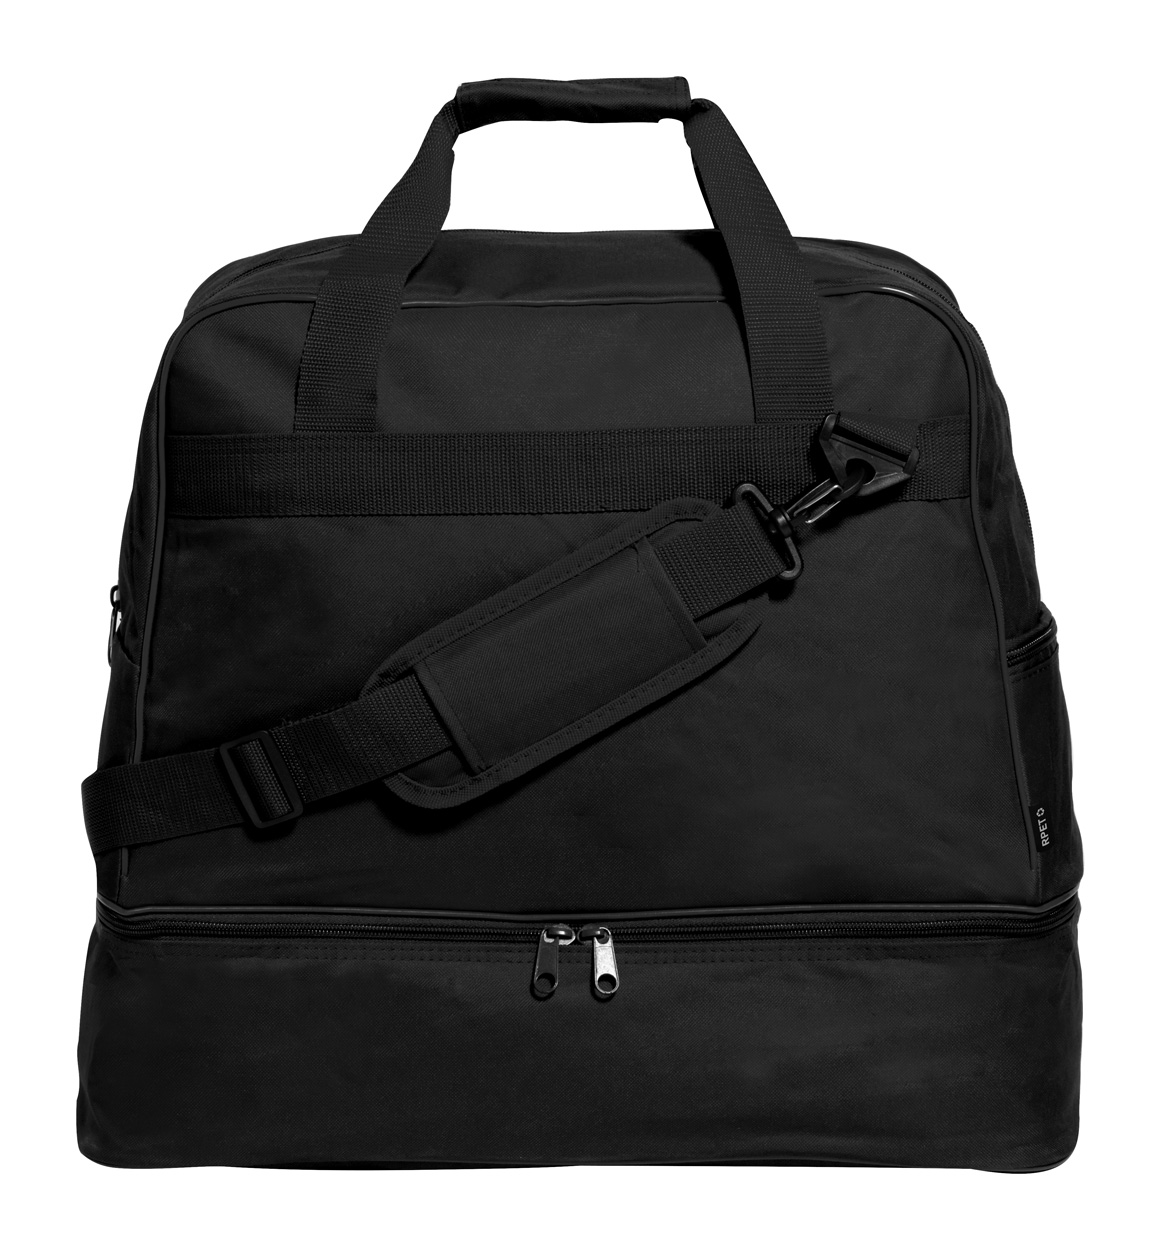 Wistol RPET sports bag - black